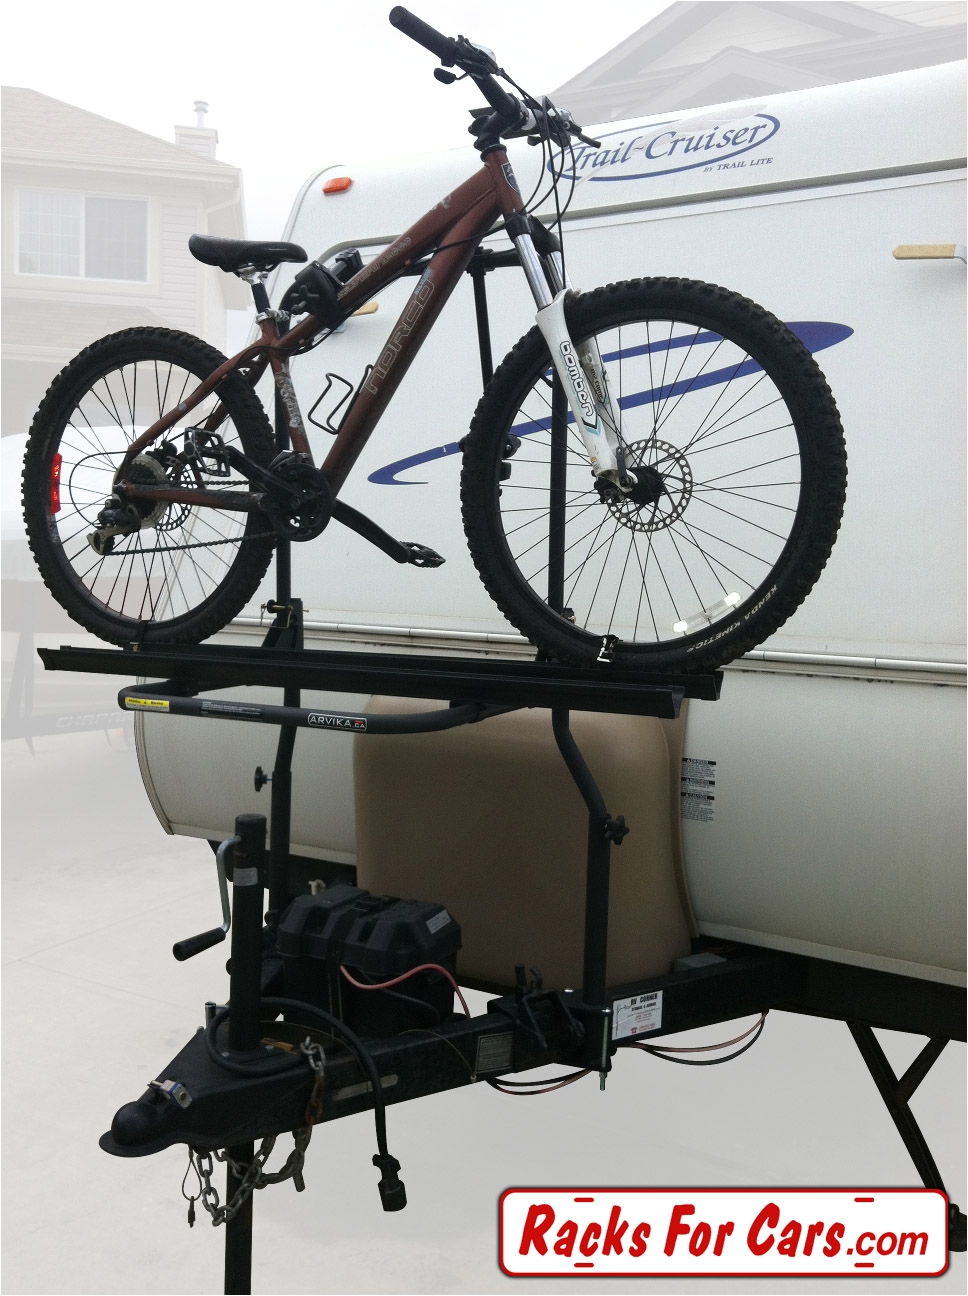 arvika 2 bike rack with travel trailer bracket holding a bike right view